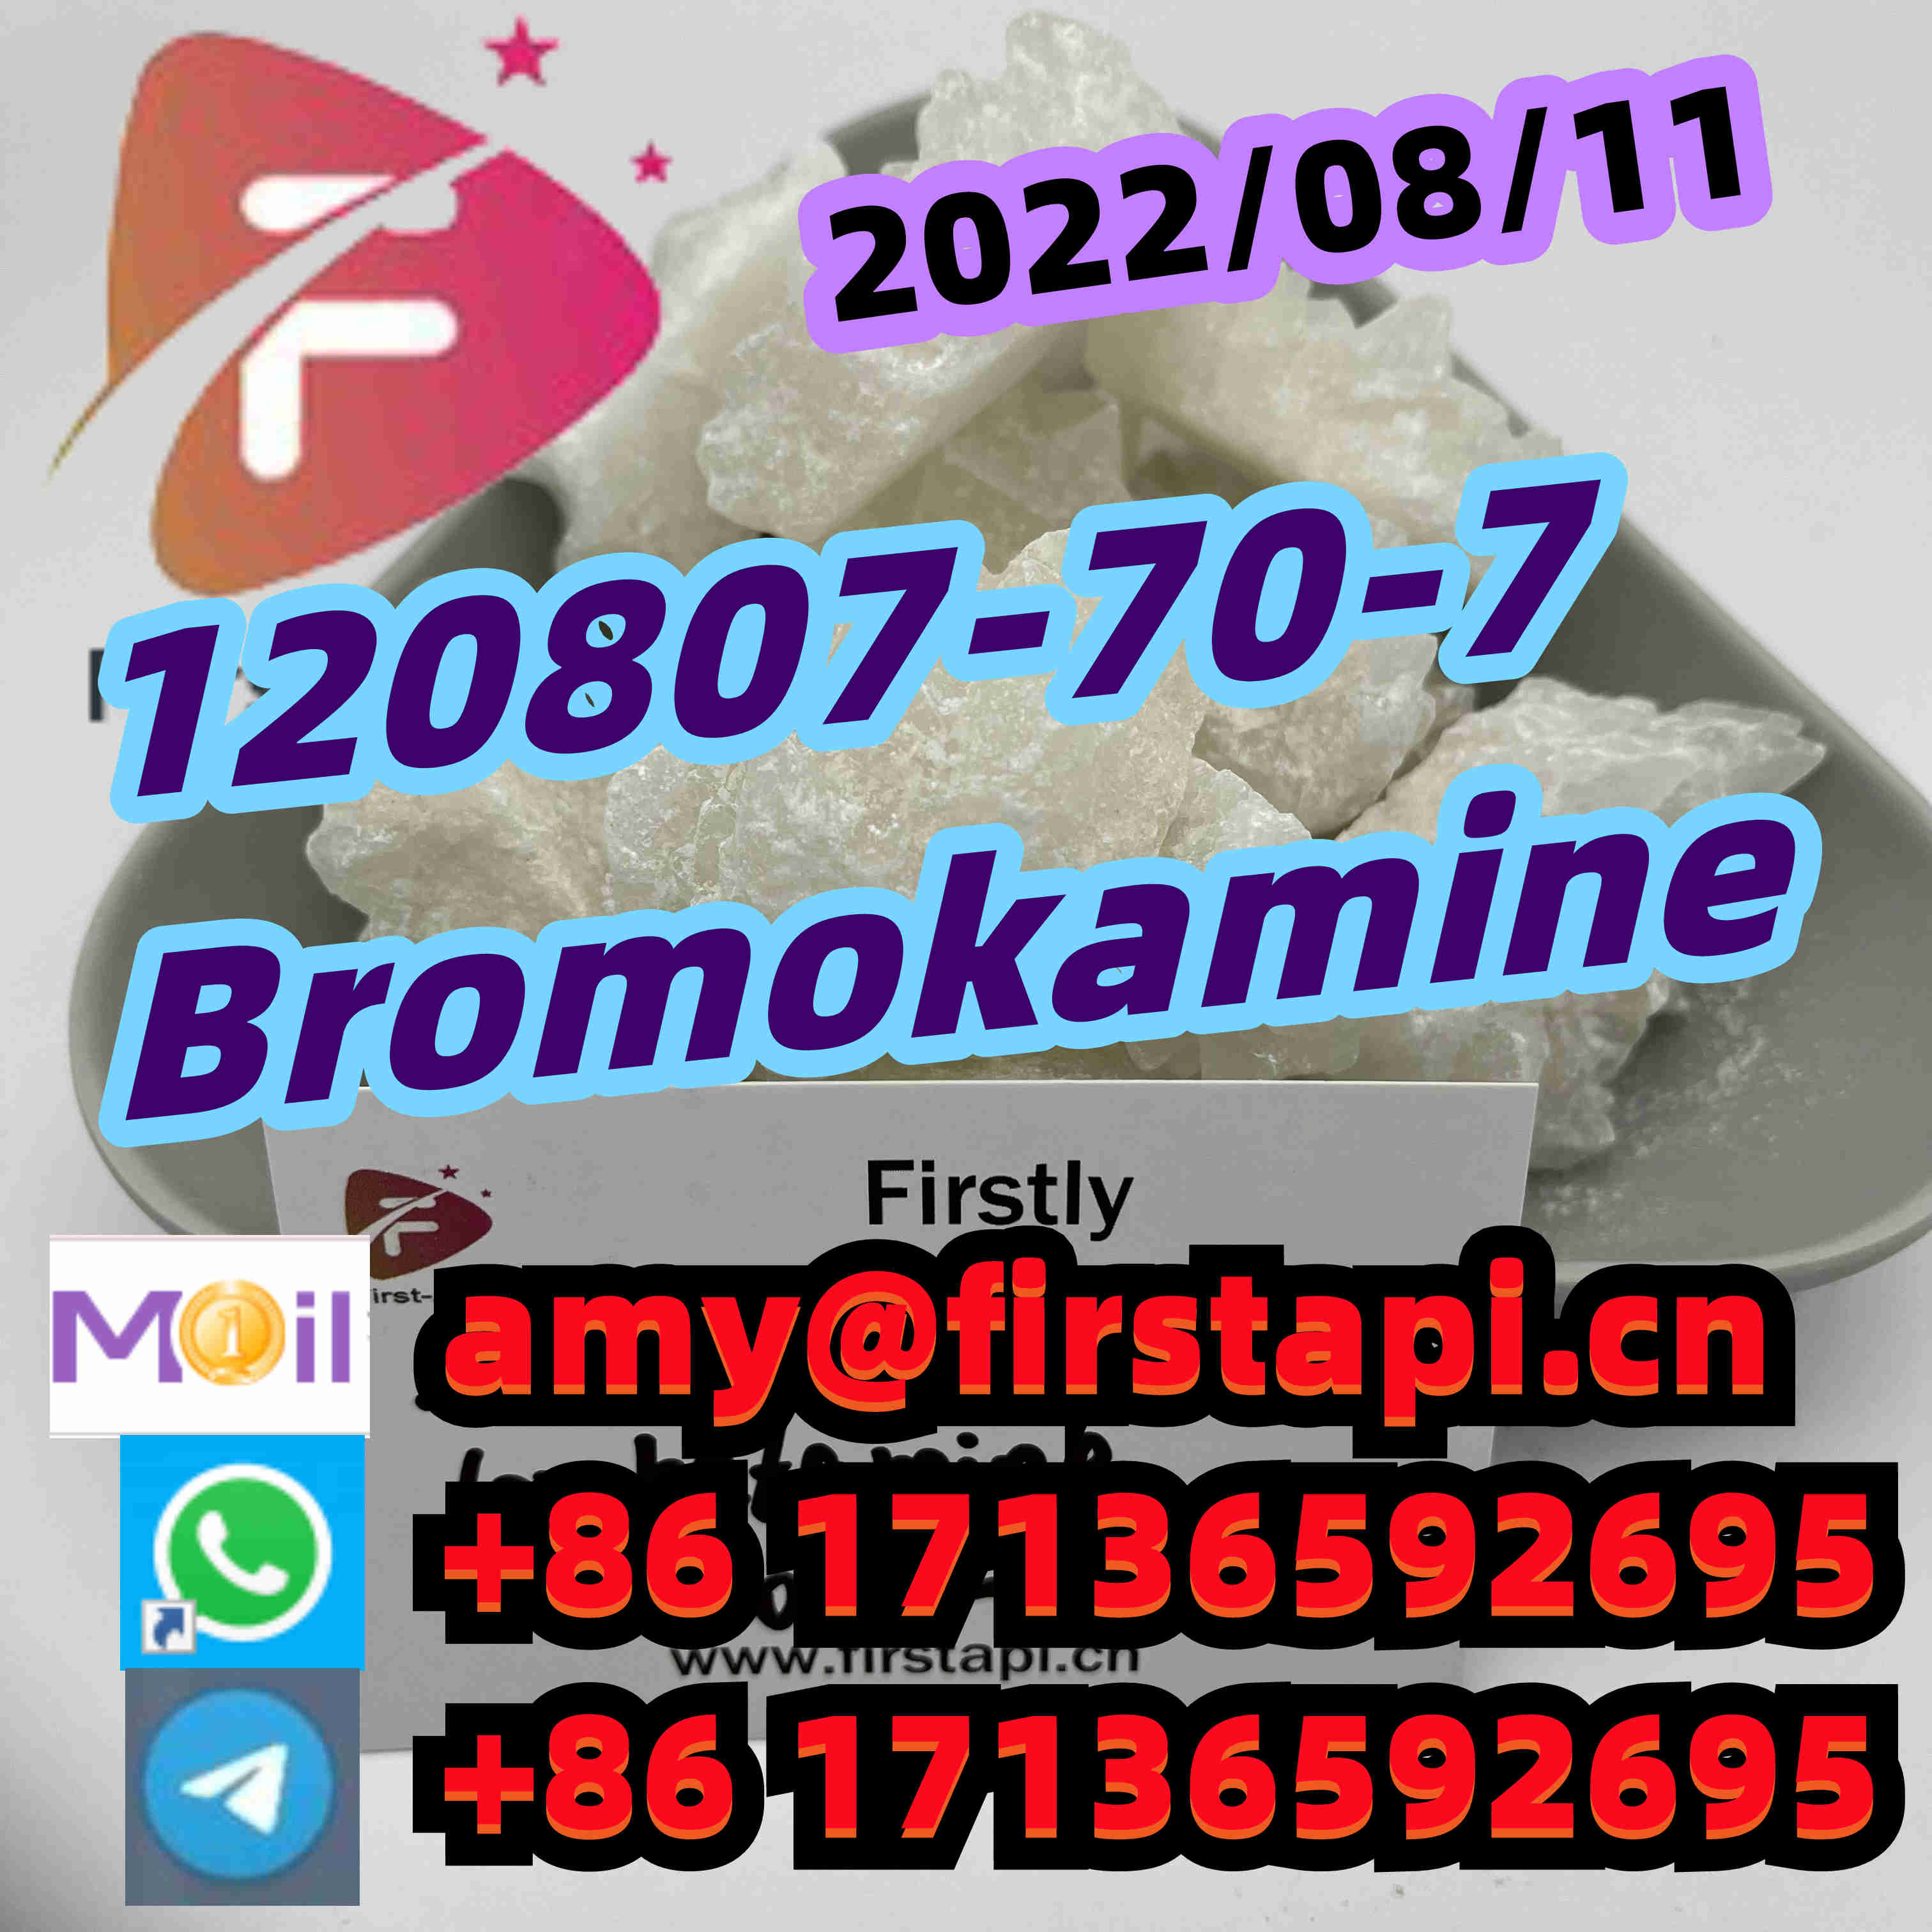 CAS No.:120807-70-7,Whatsapp:+86 17136592695,Bromokamine,salable - photo